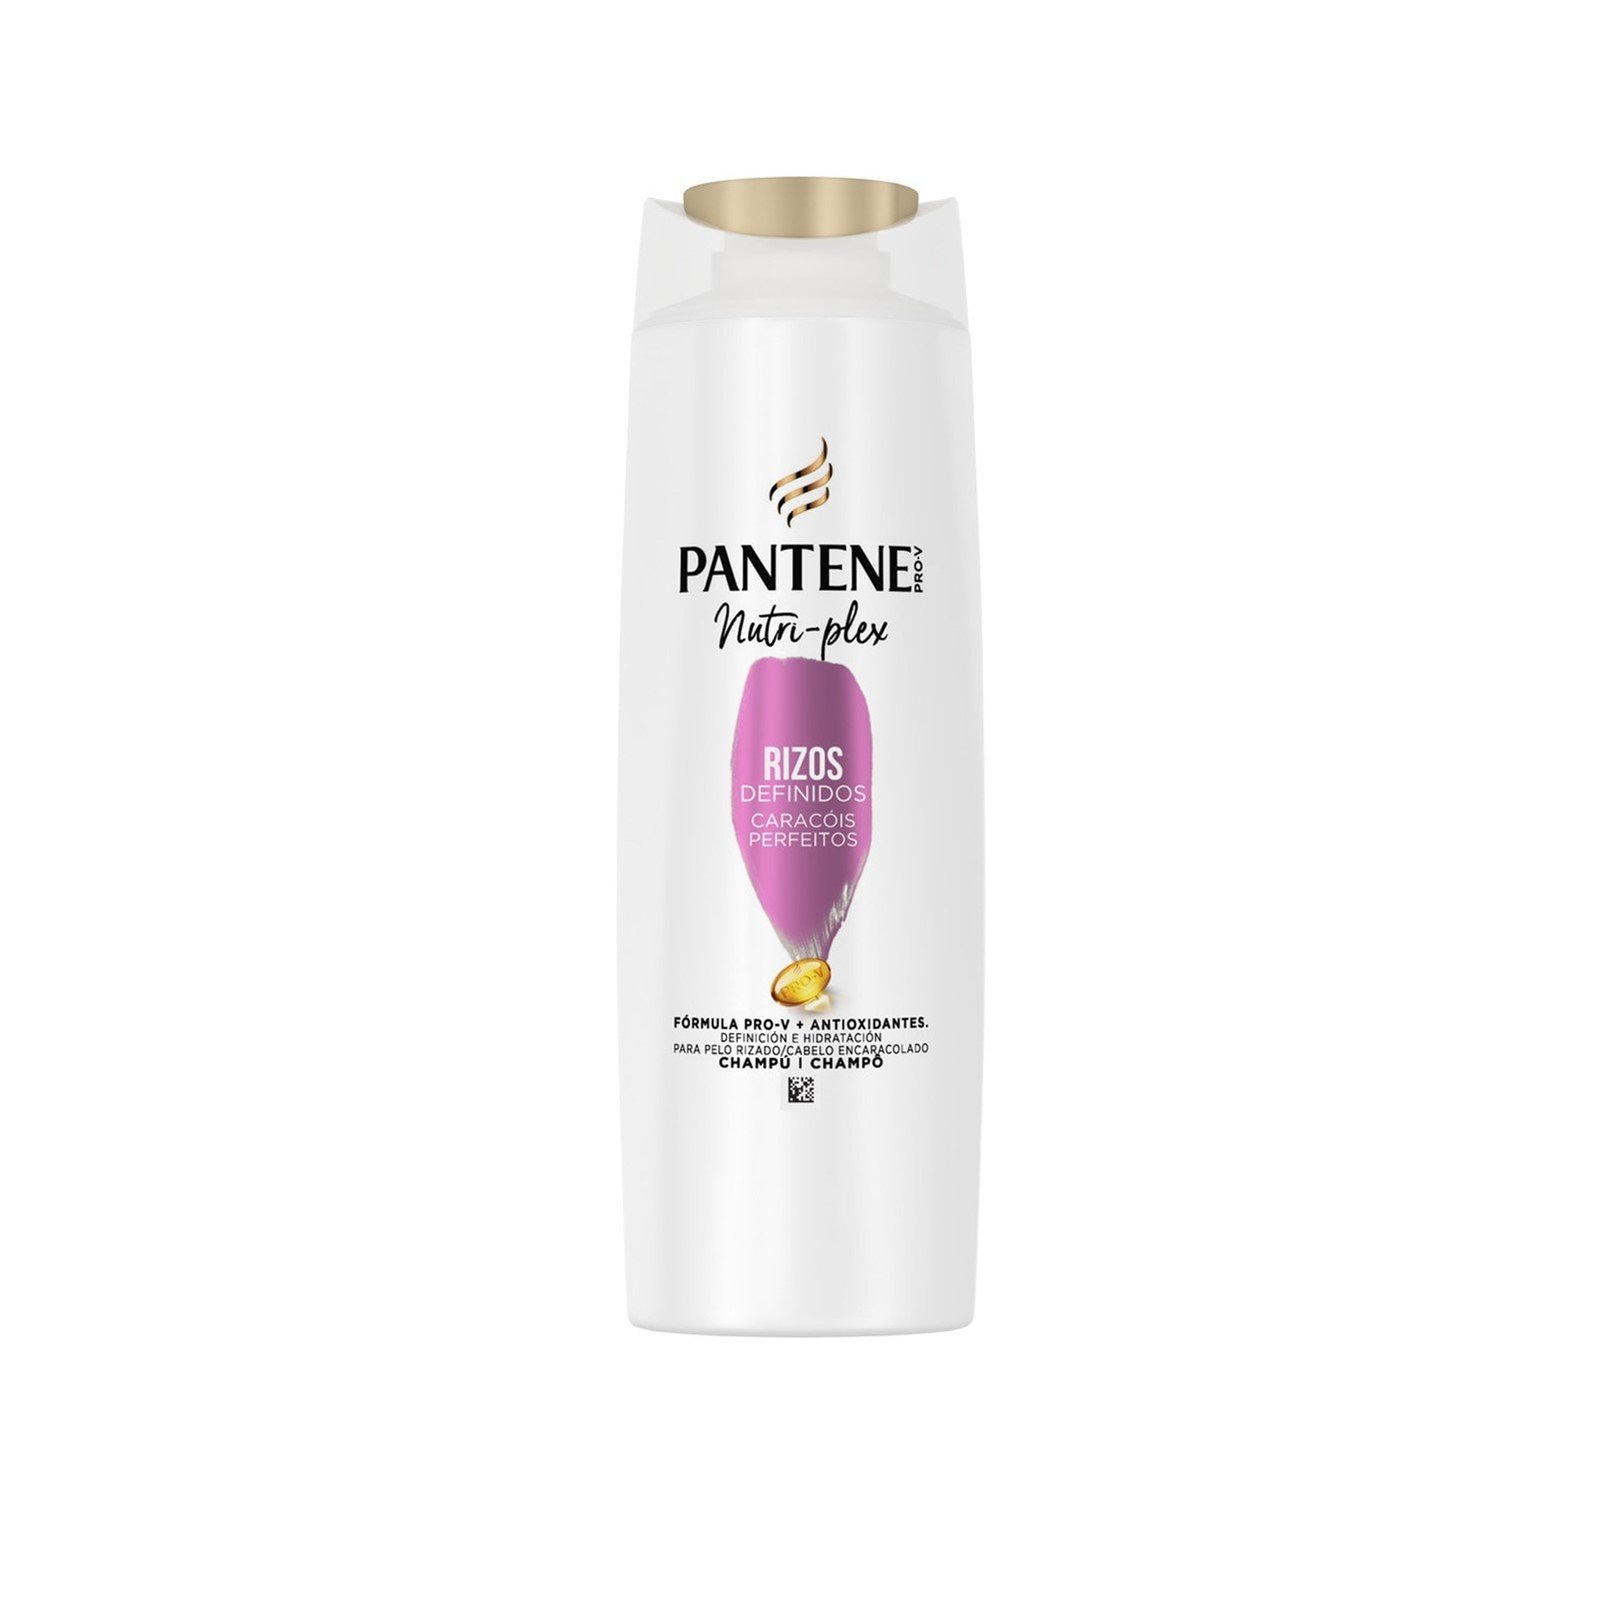 Pantene Pro-V Nutri-Plex Defined Curls Shampoo 600ml